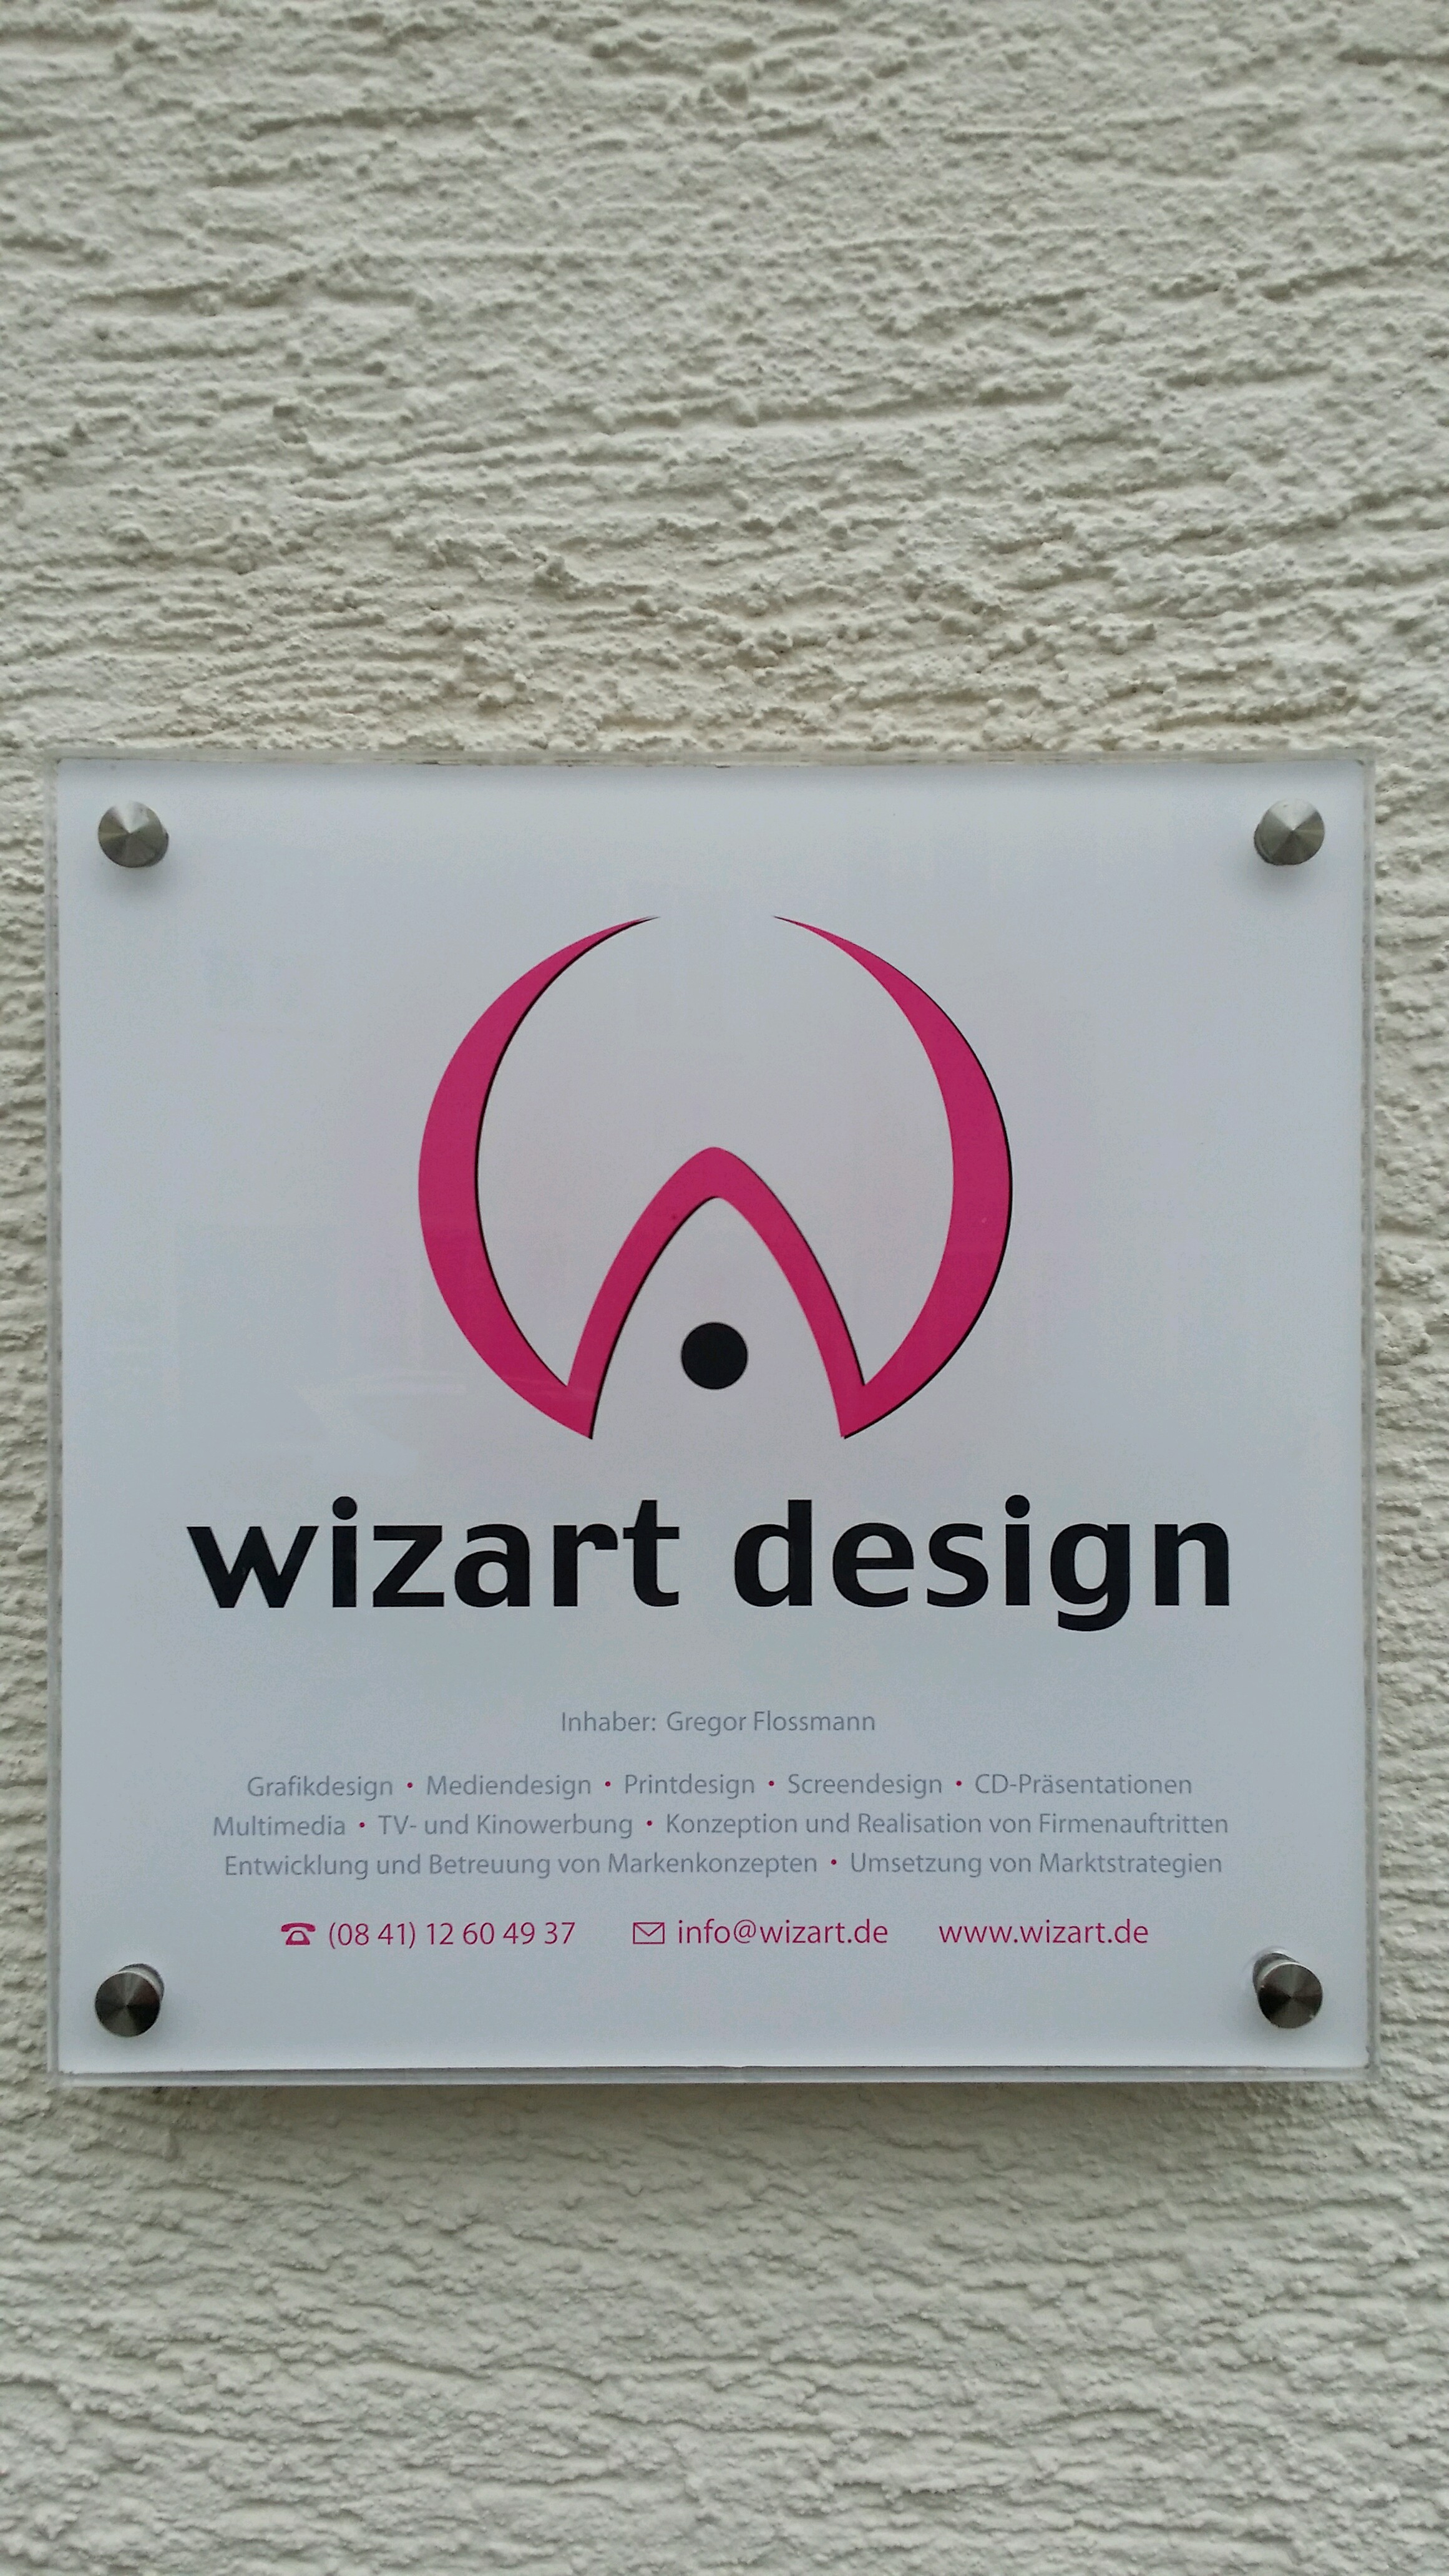 Wizart-Design...it's magic!